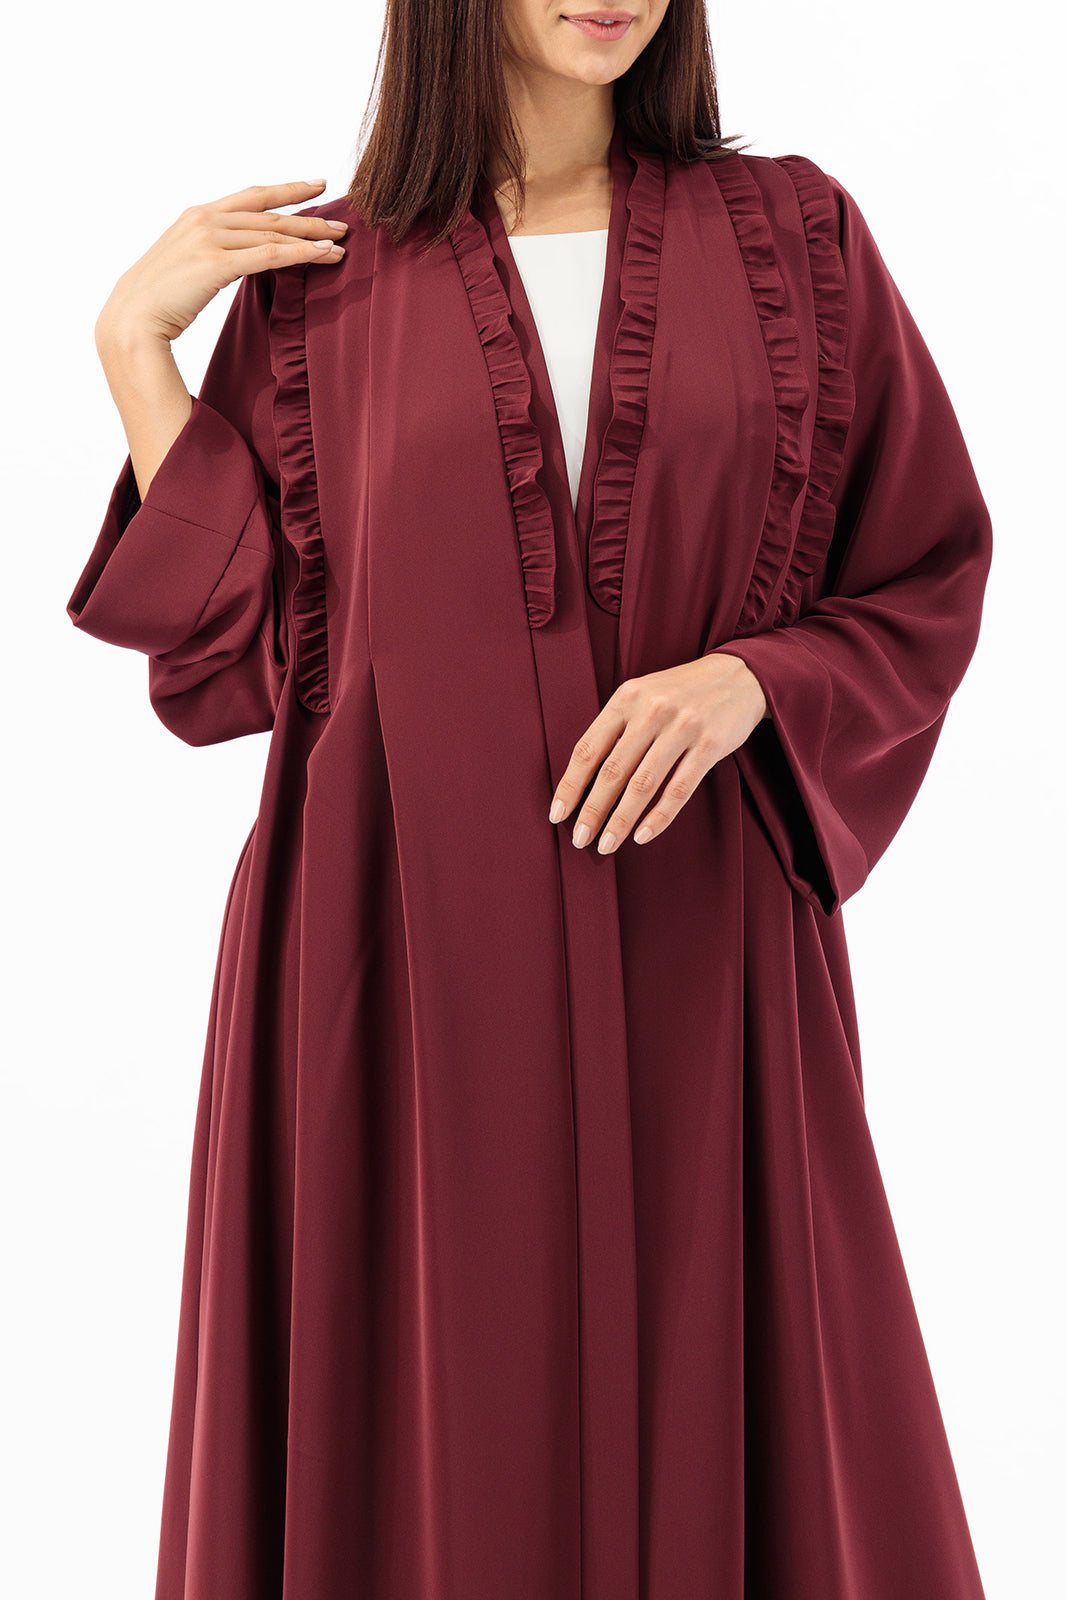 Tone on Tone asymmetrical front ruffled with back pleated abaya